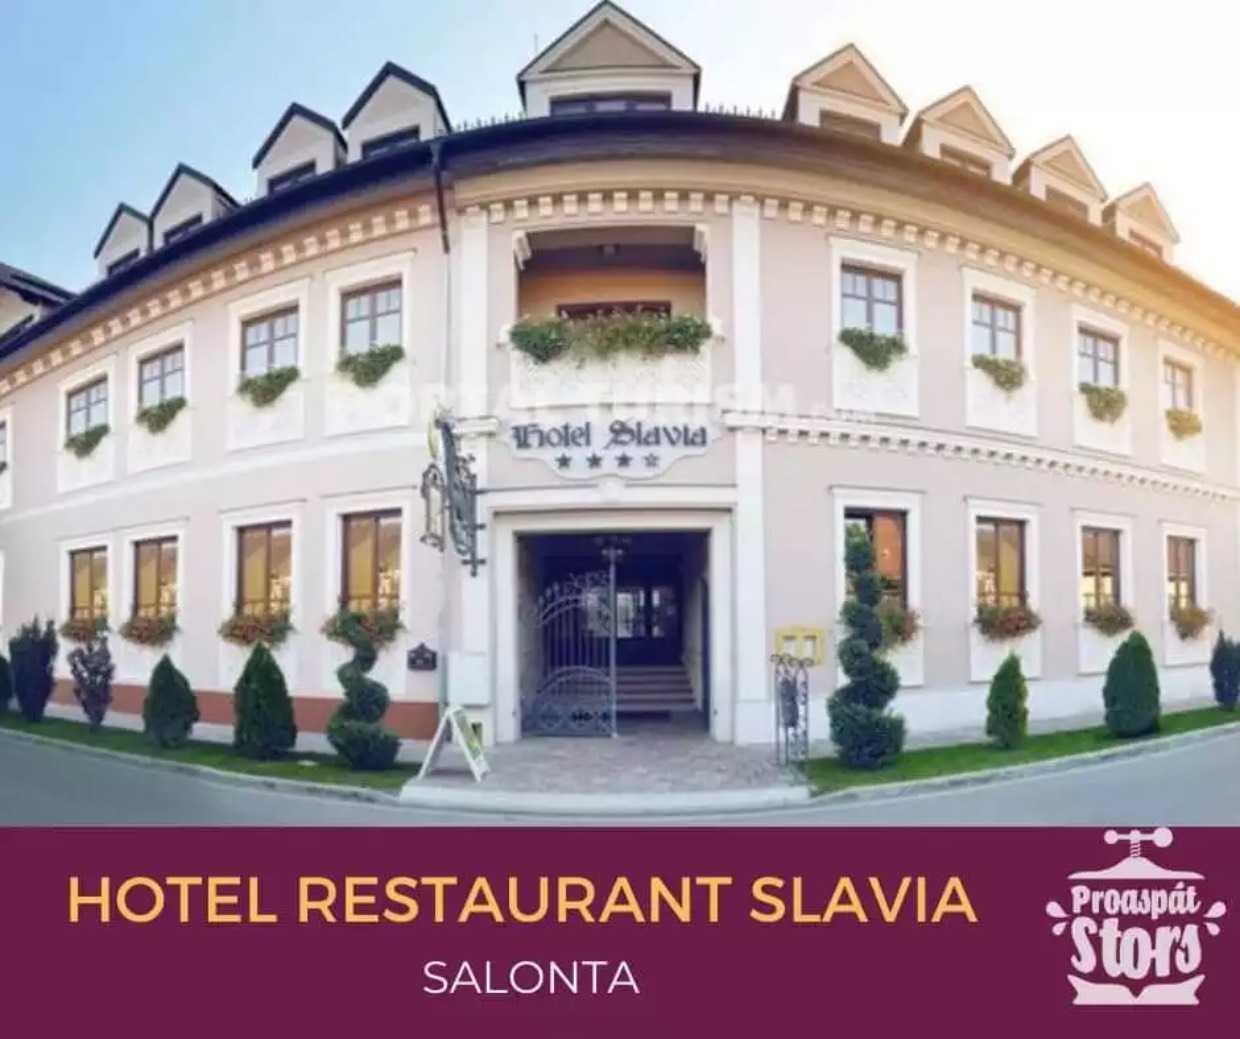 Proaspat Stors - Hotel & Restaurant Slavia